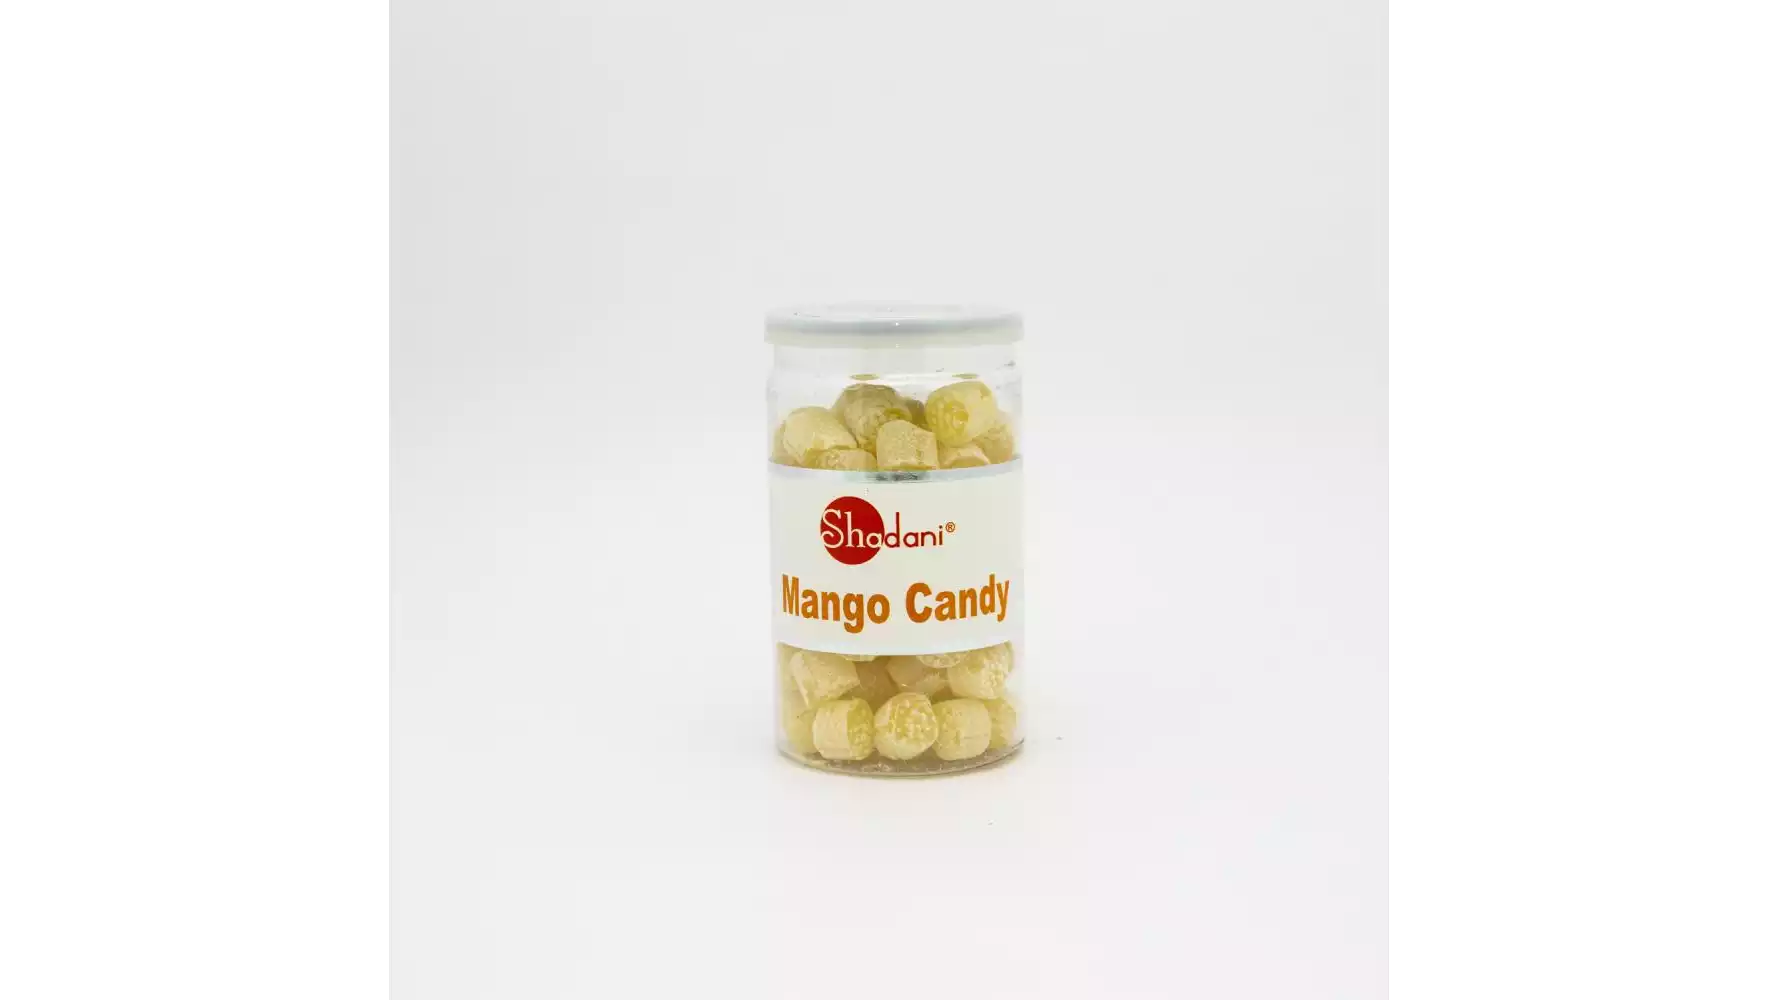 Shadani Mango Candy (135g)